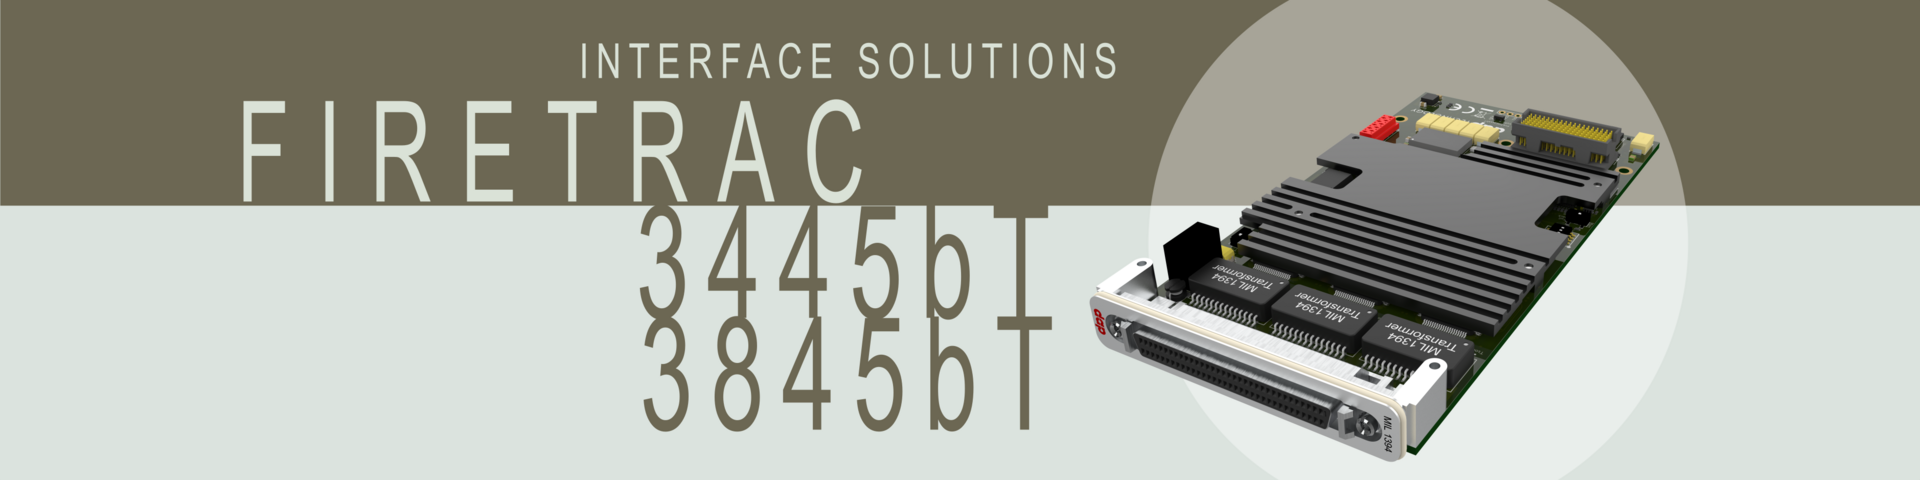 AS5643 Advanced Interface Card - FireTrac3445bT